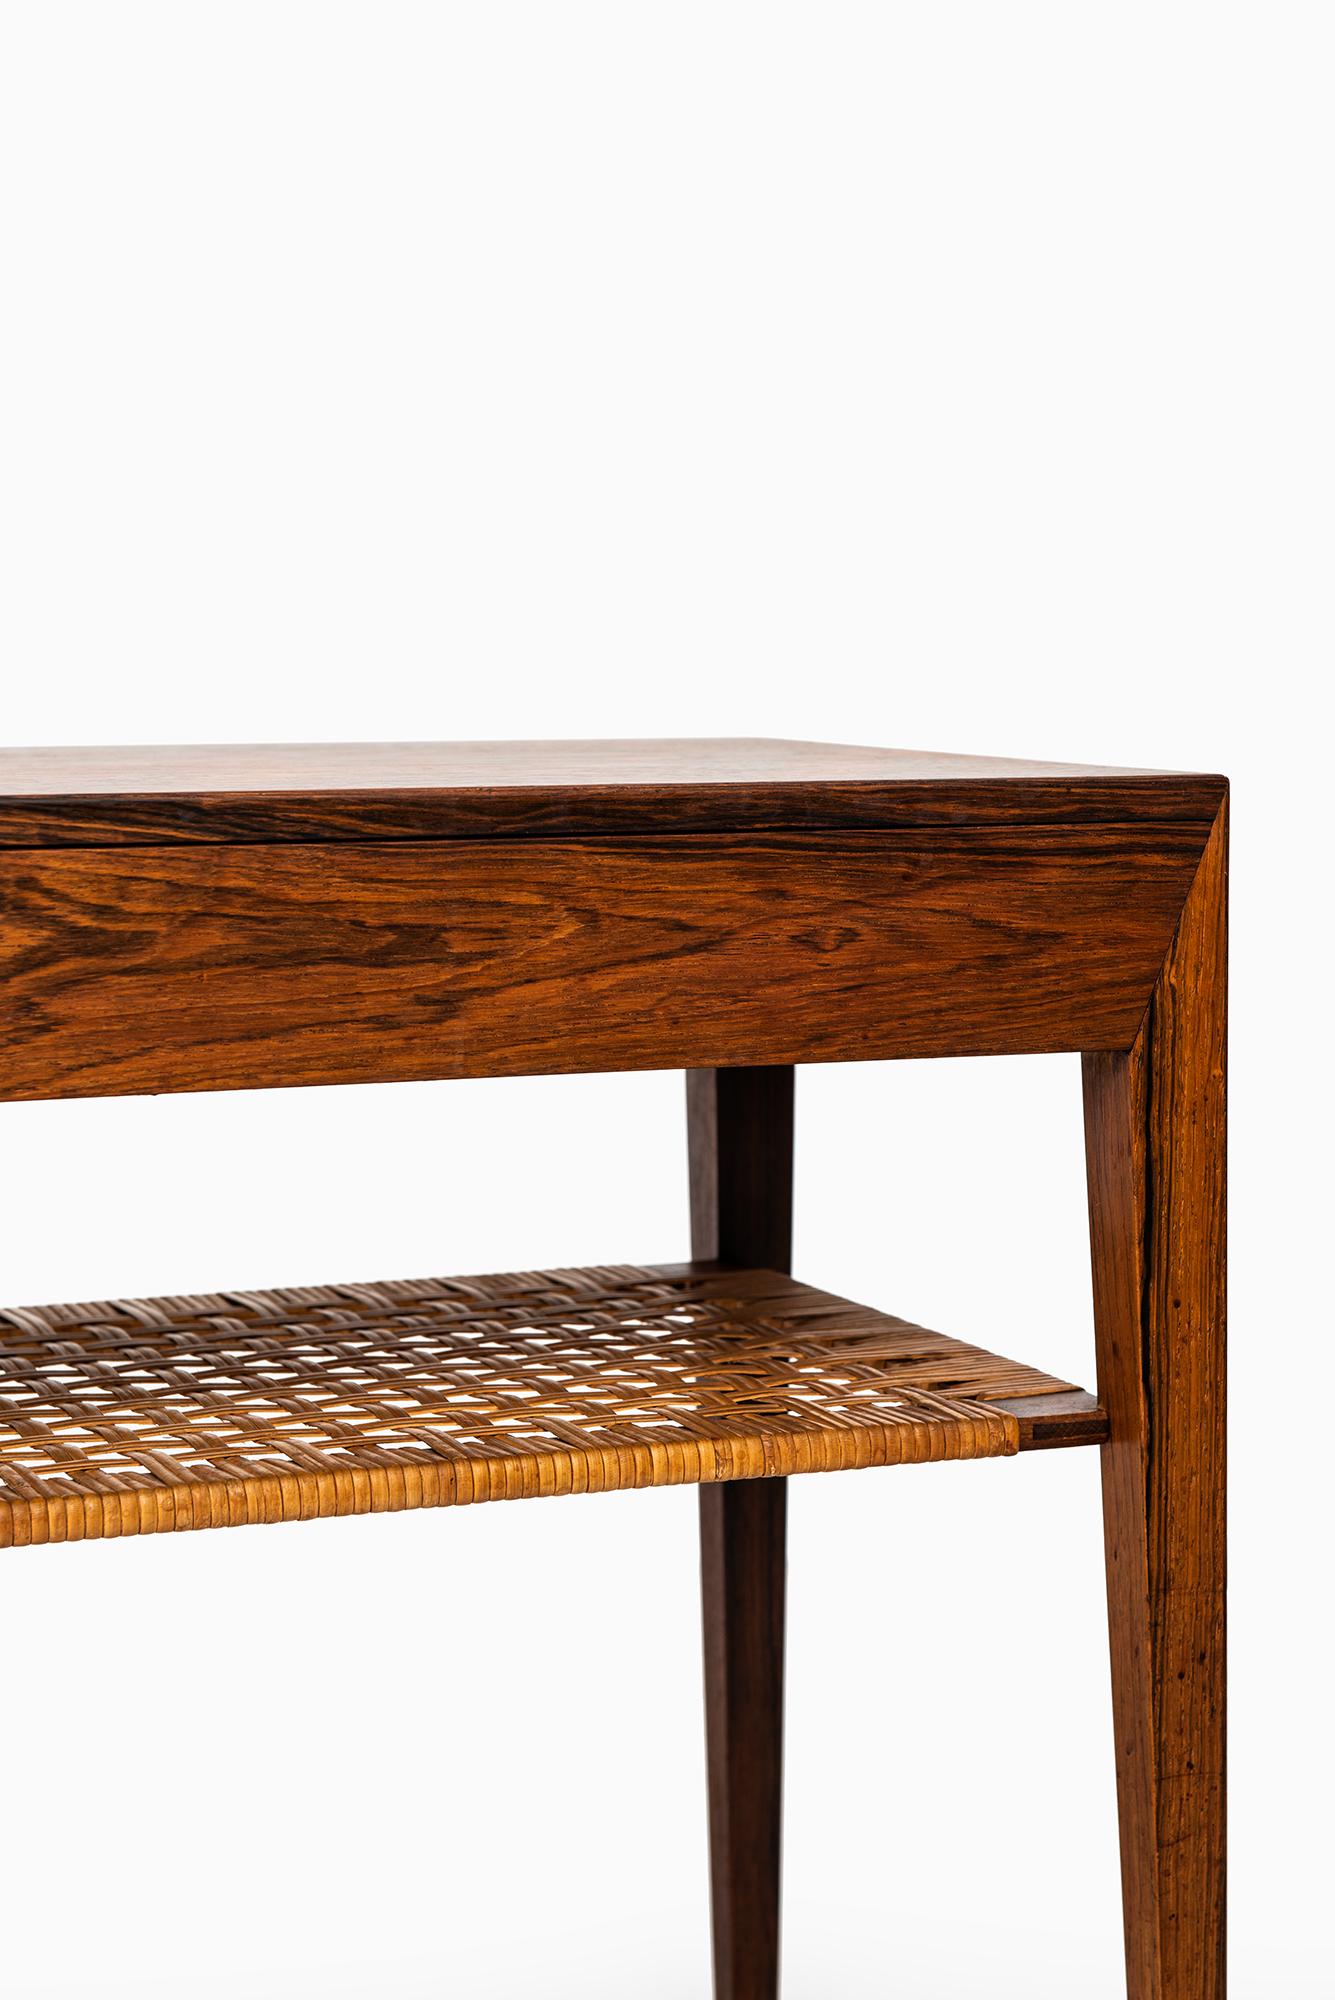 Rare freestanding bedside tables designed by Severin Hansen. Produced by Haslev Møbelsnedkeri in Denmark.